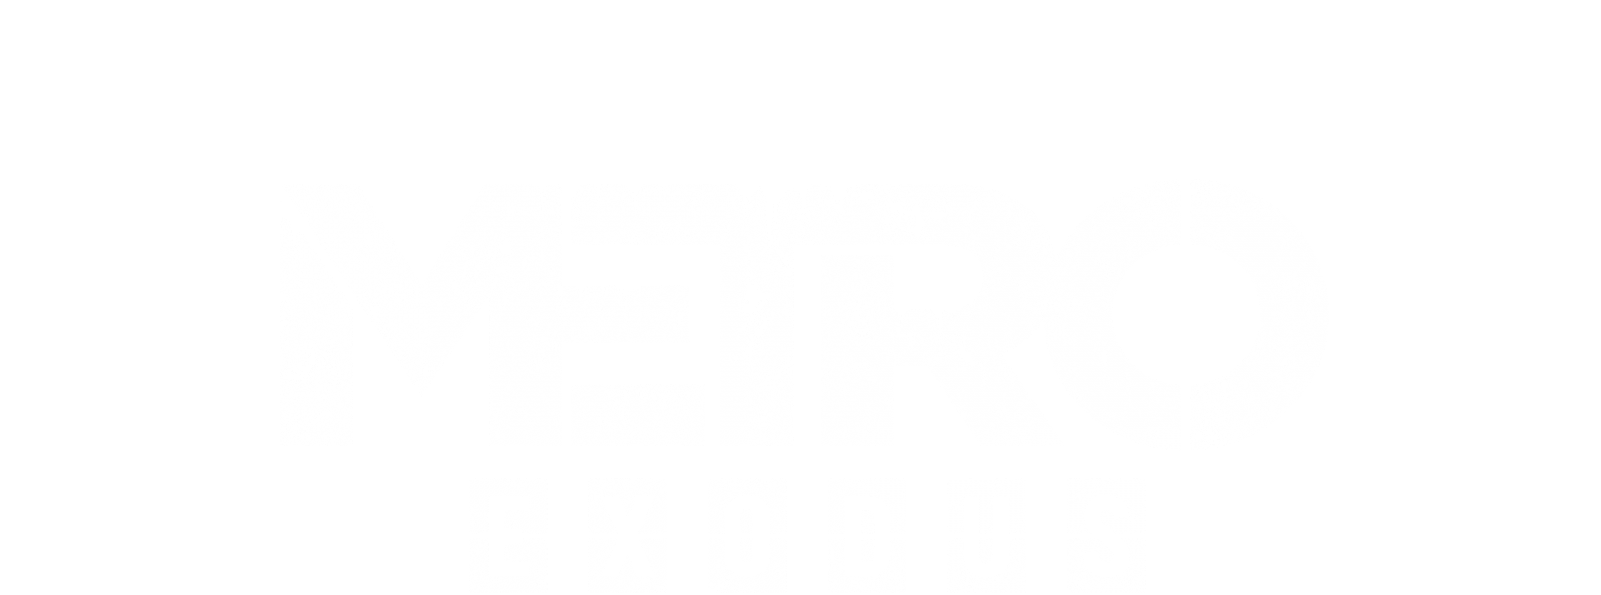 Metro Exodus PNG High Quality Image